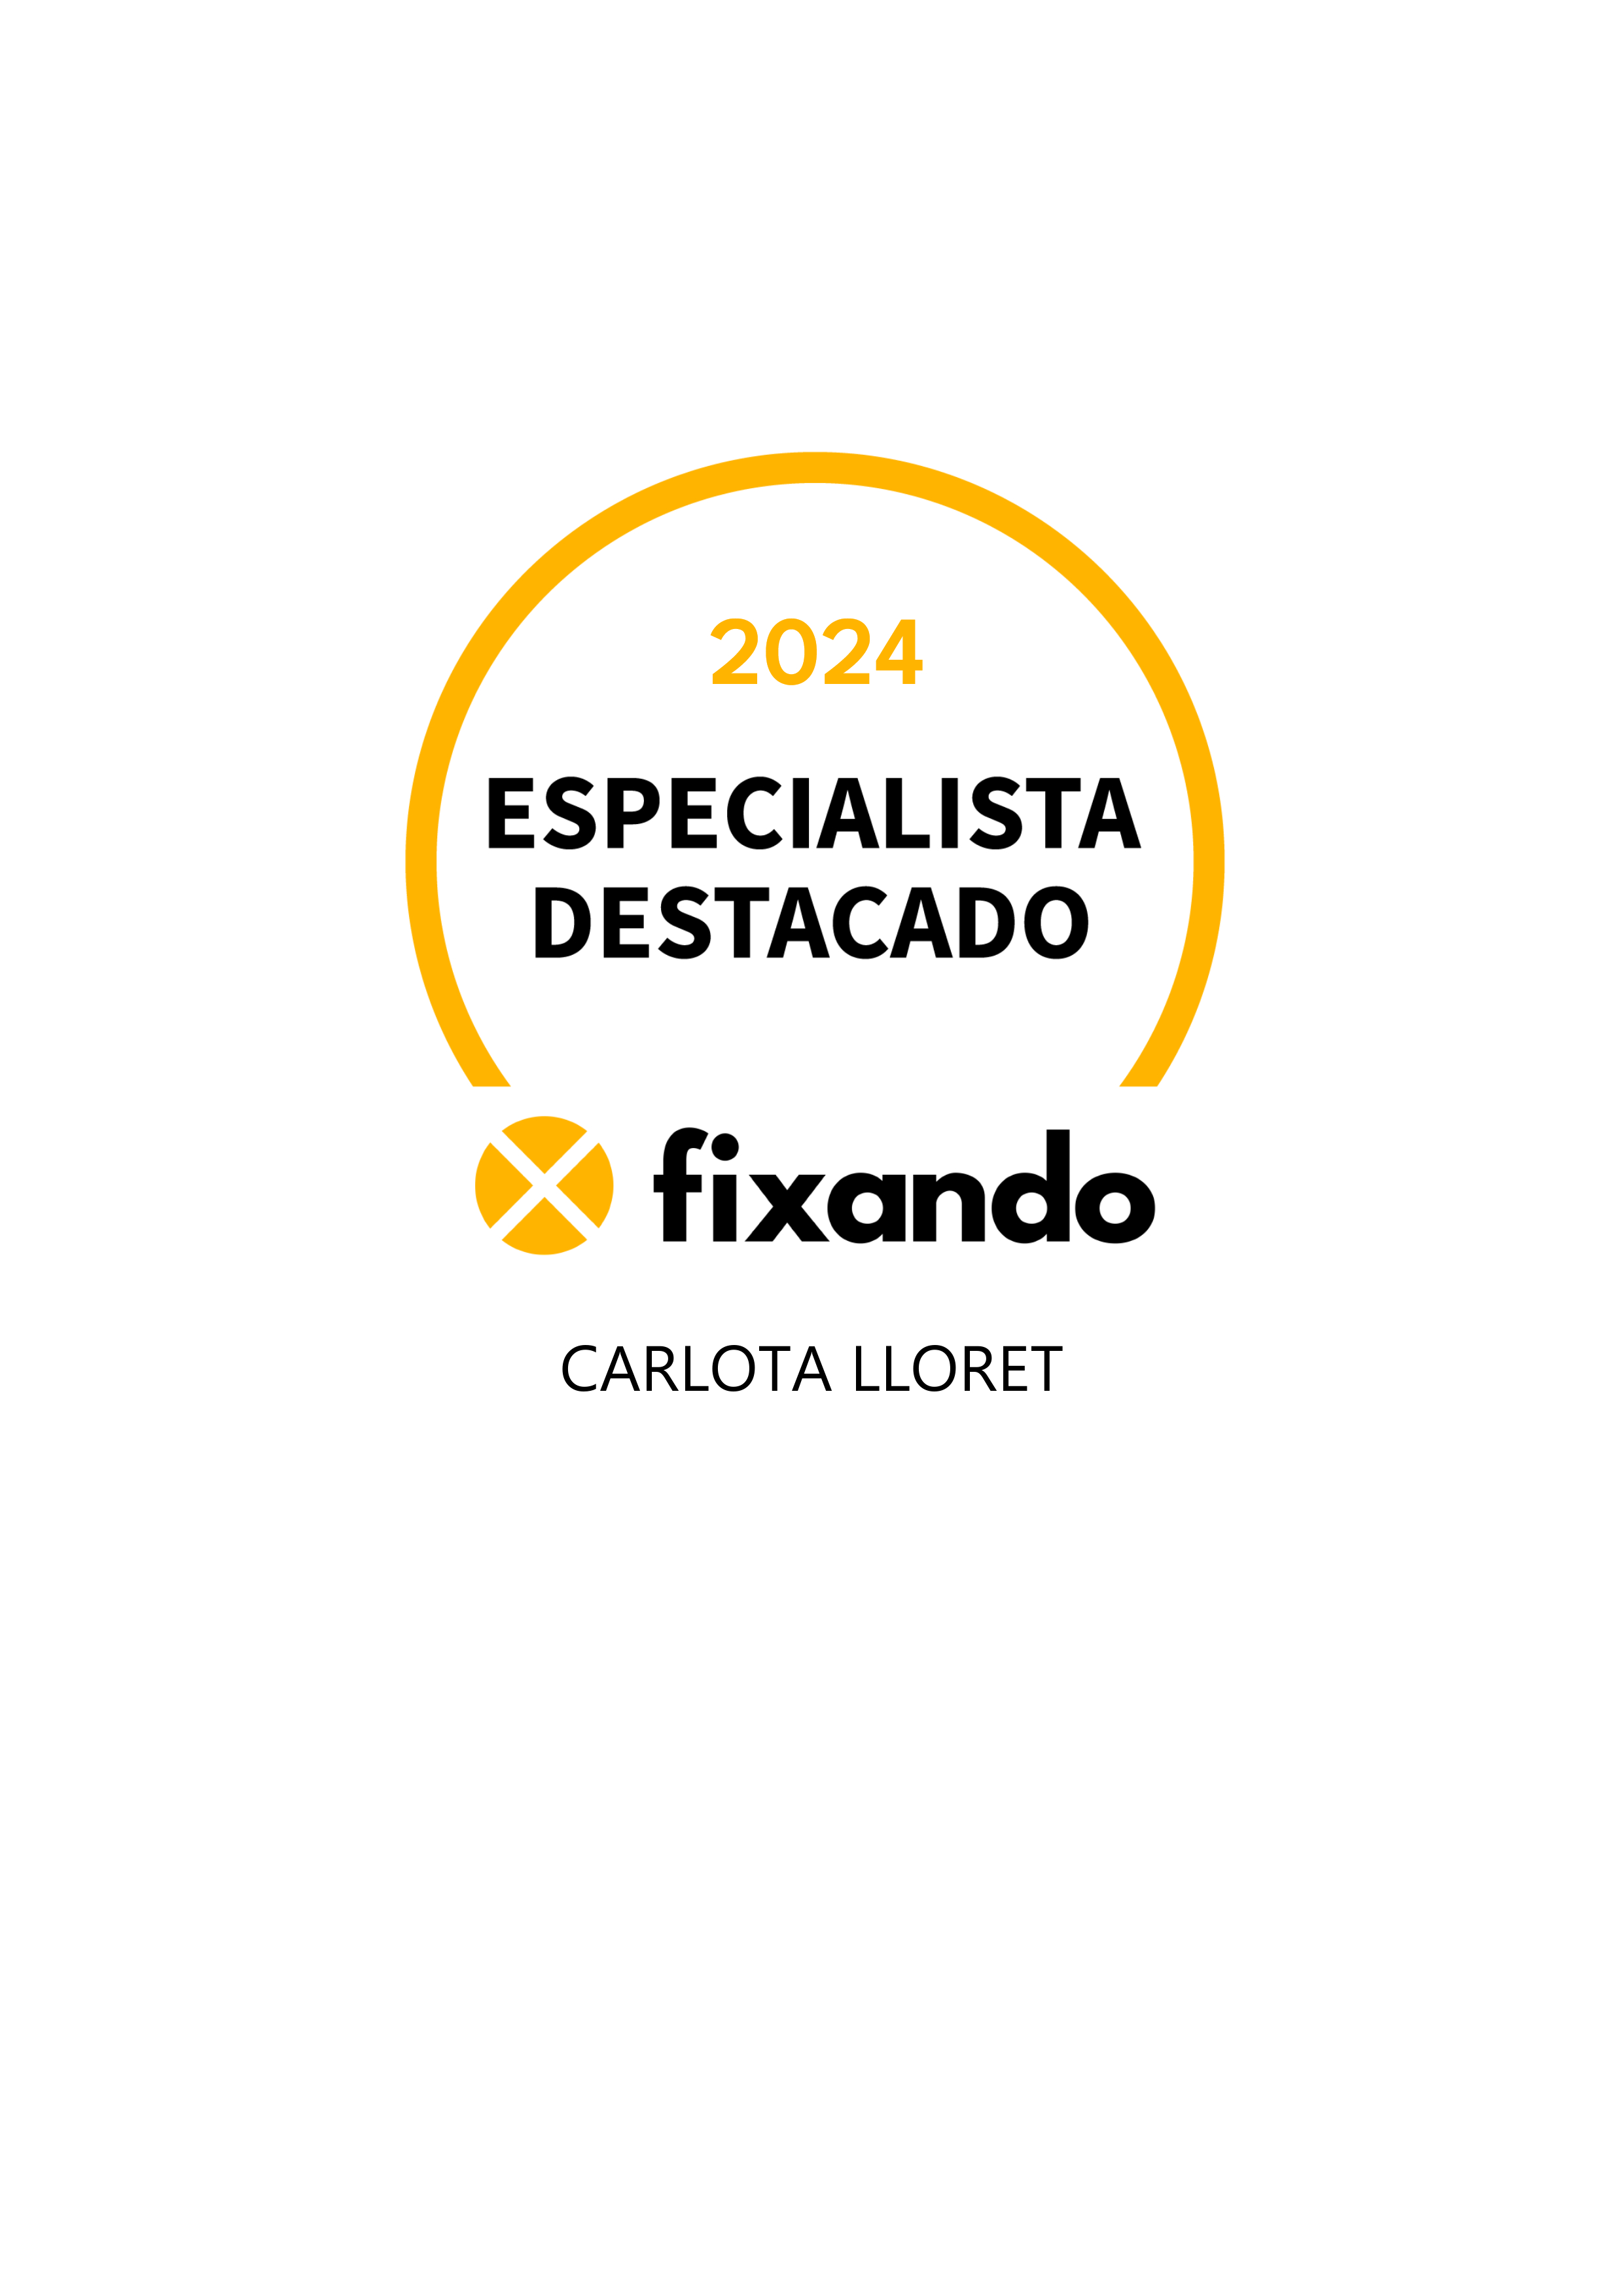 Carlota Lloret - Lisboa - Marketing Digital